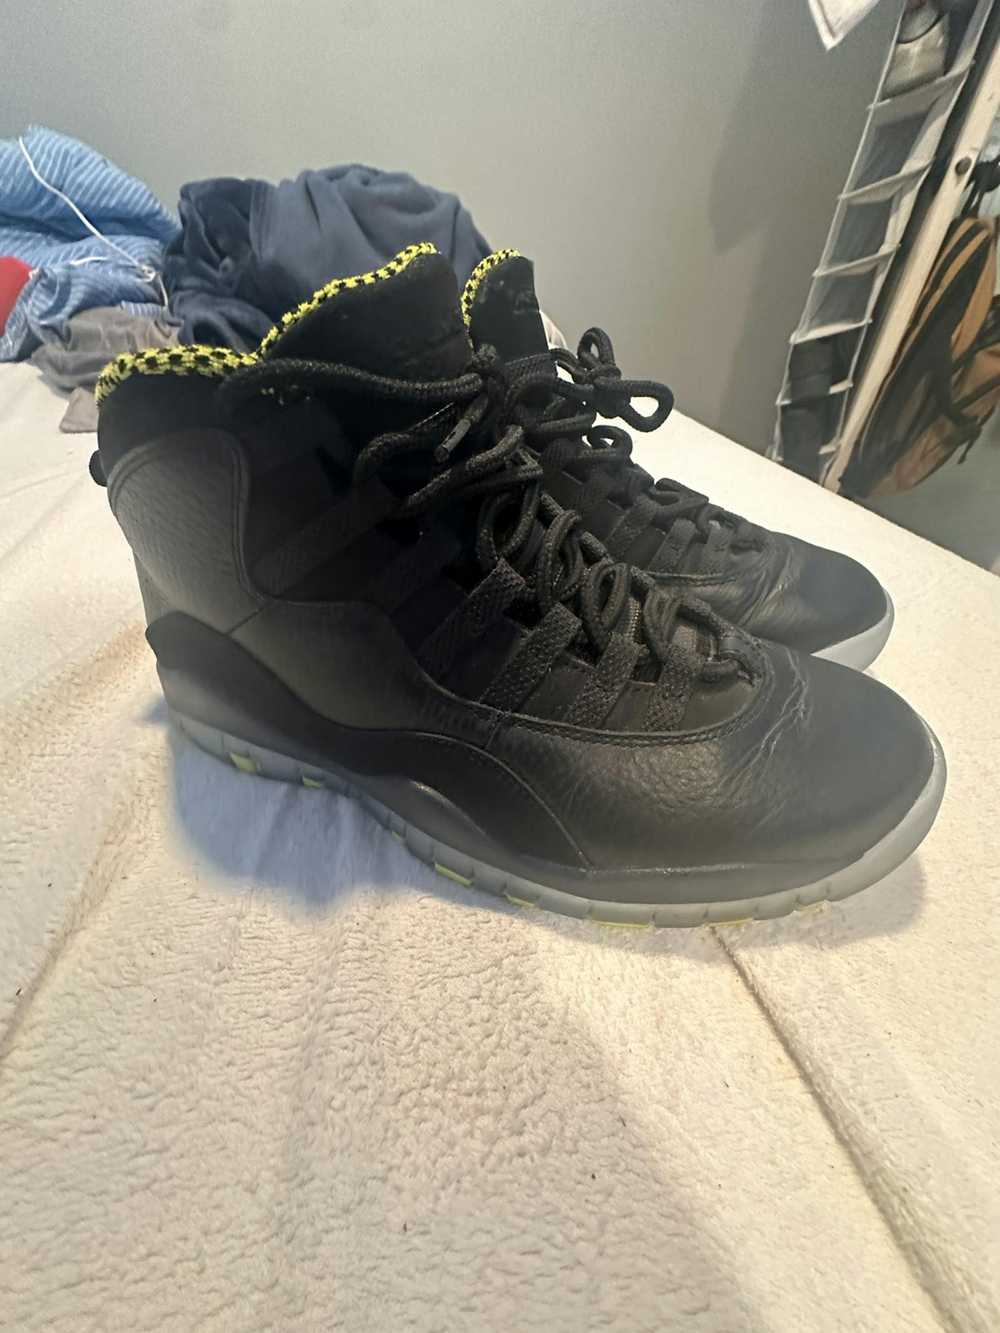 Jordan Brand × Nike Jordan retro 10 venoms - image 1